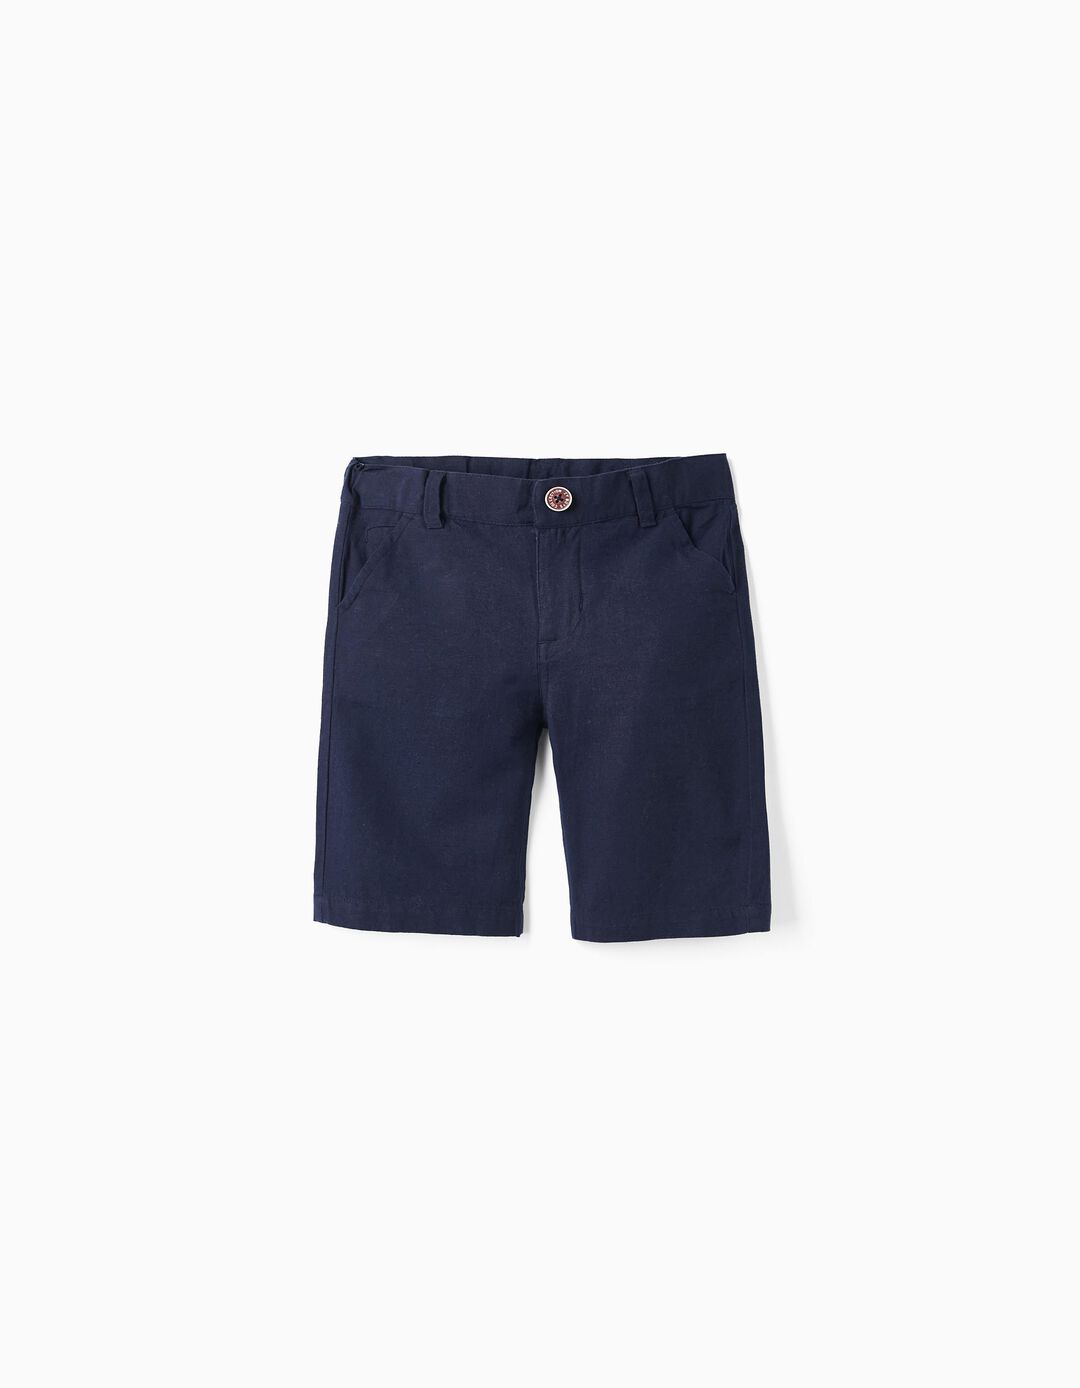 Chino Shorts for Boys, Dark Blue